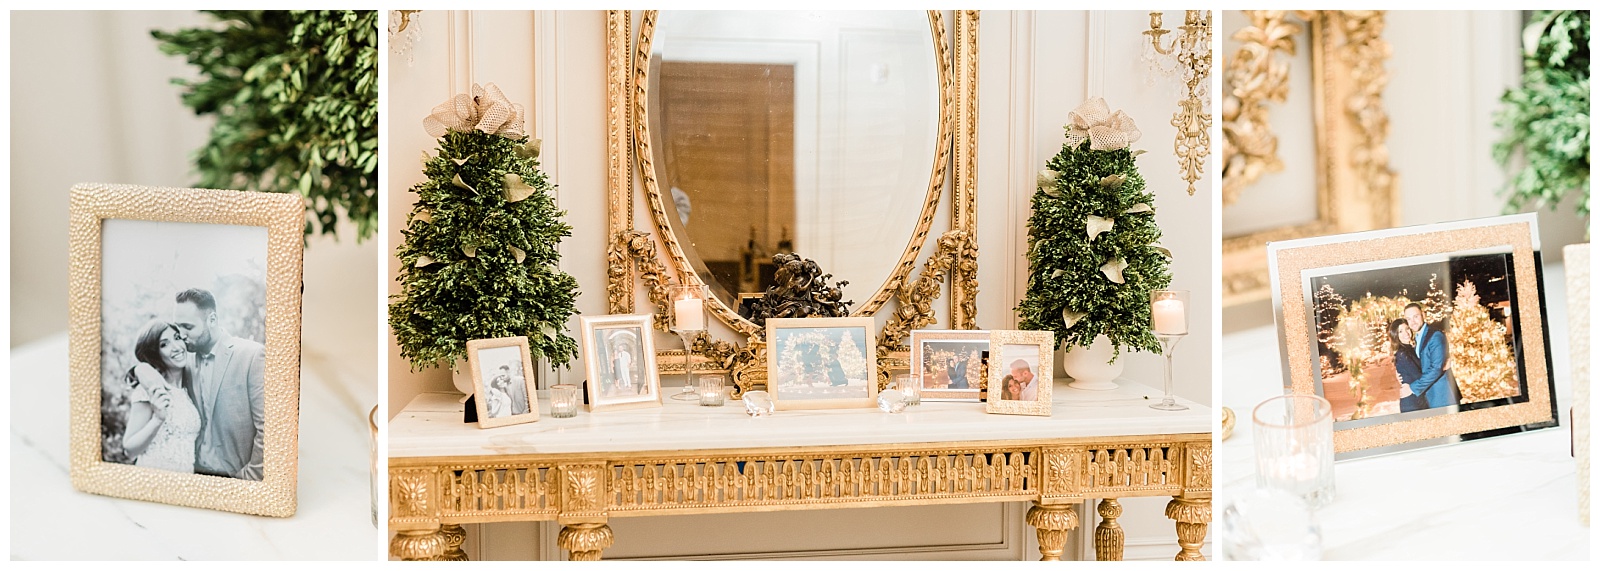 Park Chateau Wedding, Photographer, New Jersey, NJ, Winter, Reception Details, Photo Table